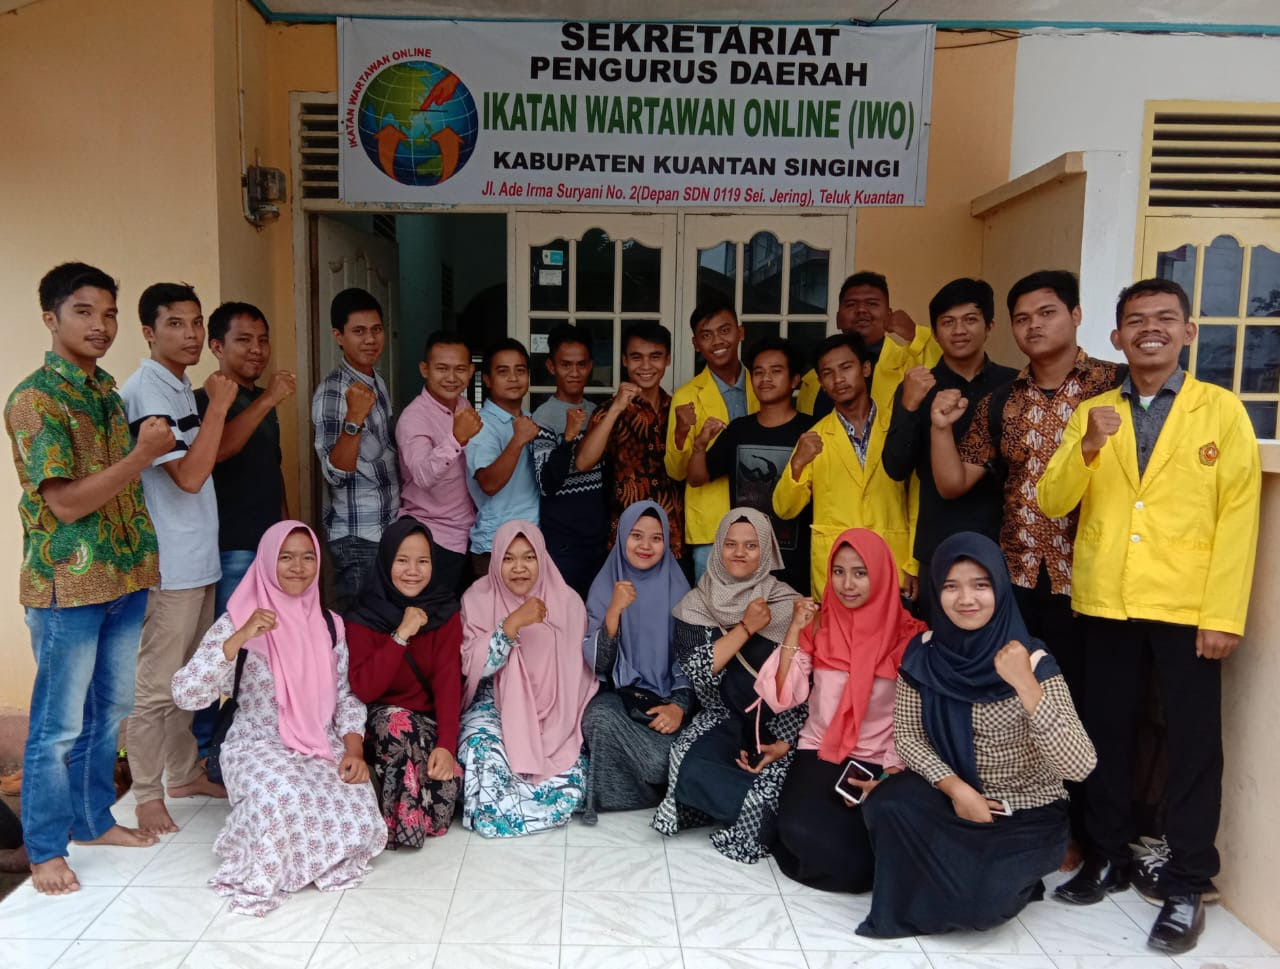 Belajar Jurnalistik dan Media, DPM Uniks Kunjungi Sekretariat IWO Kuansing